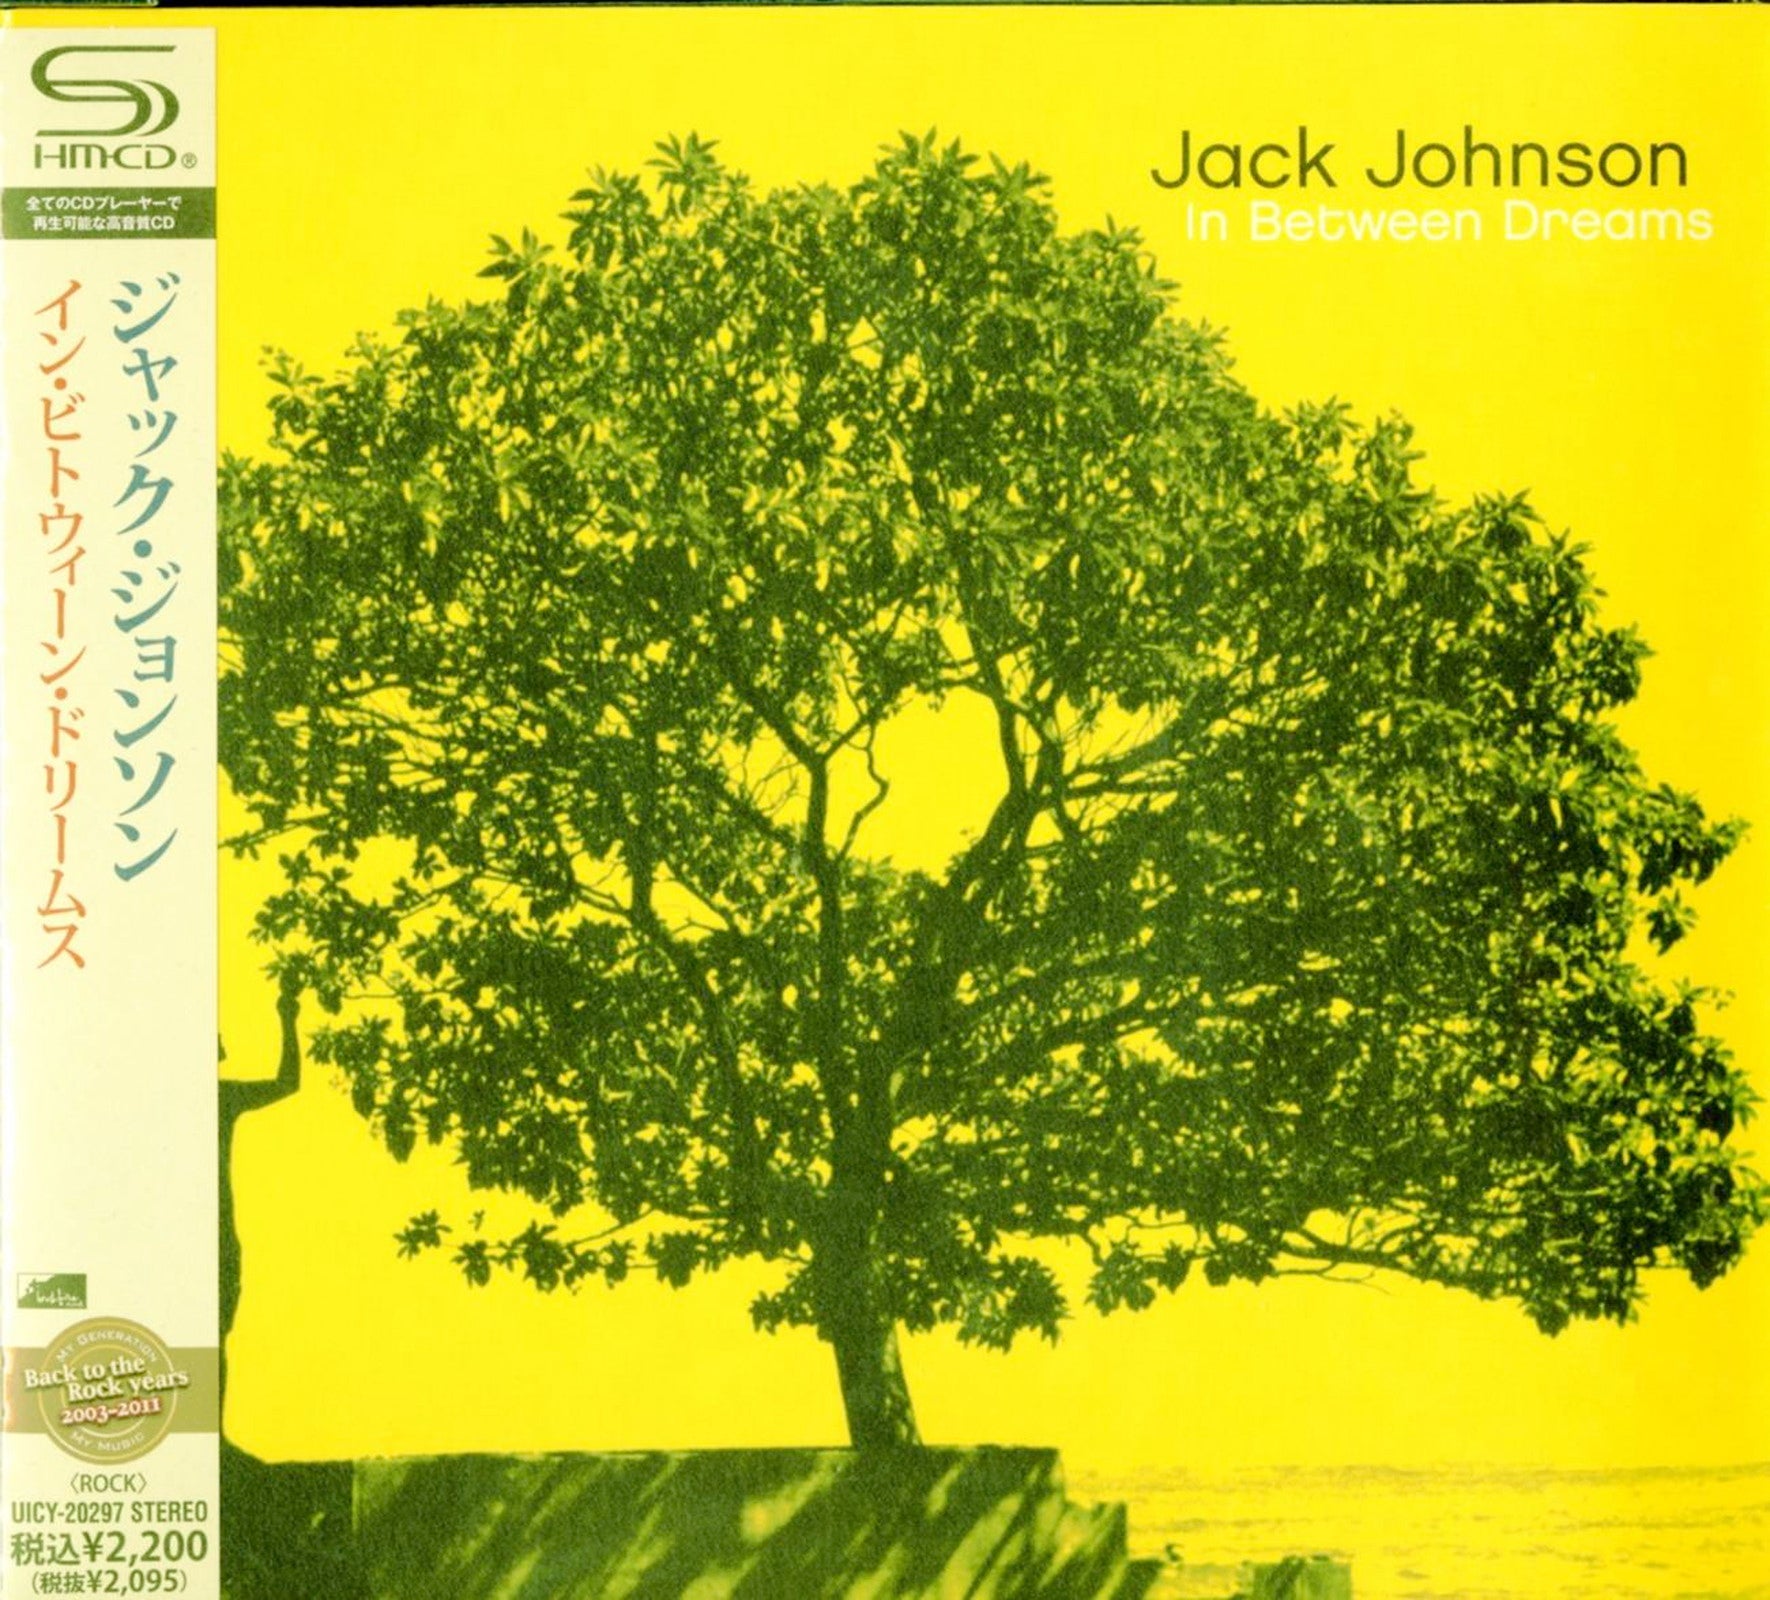 Jack Johnson「In Between Dreams」カセットテープ - レコード